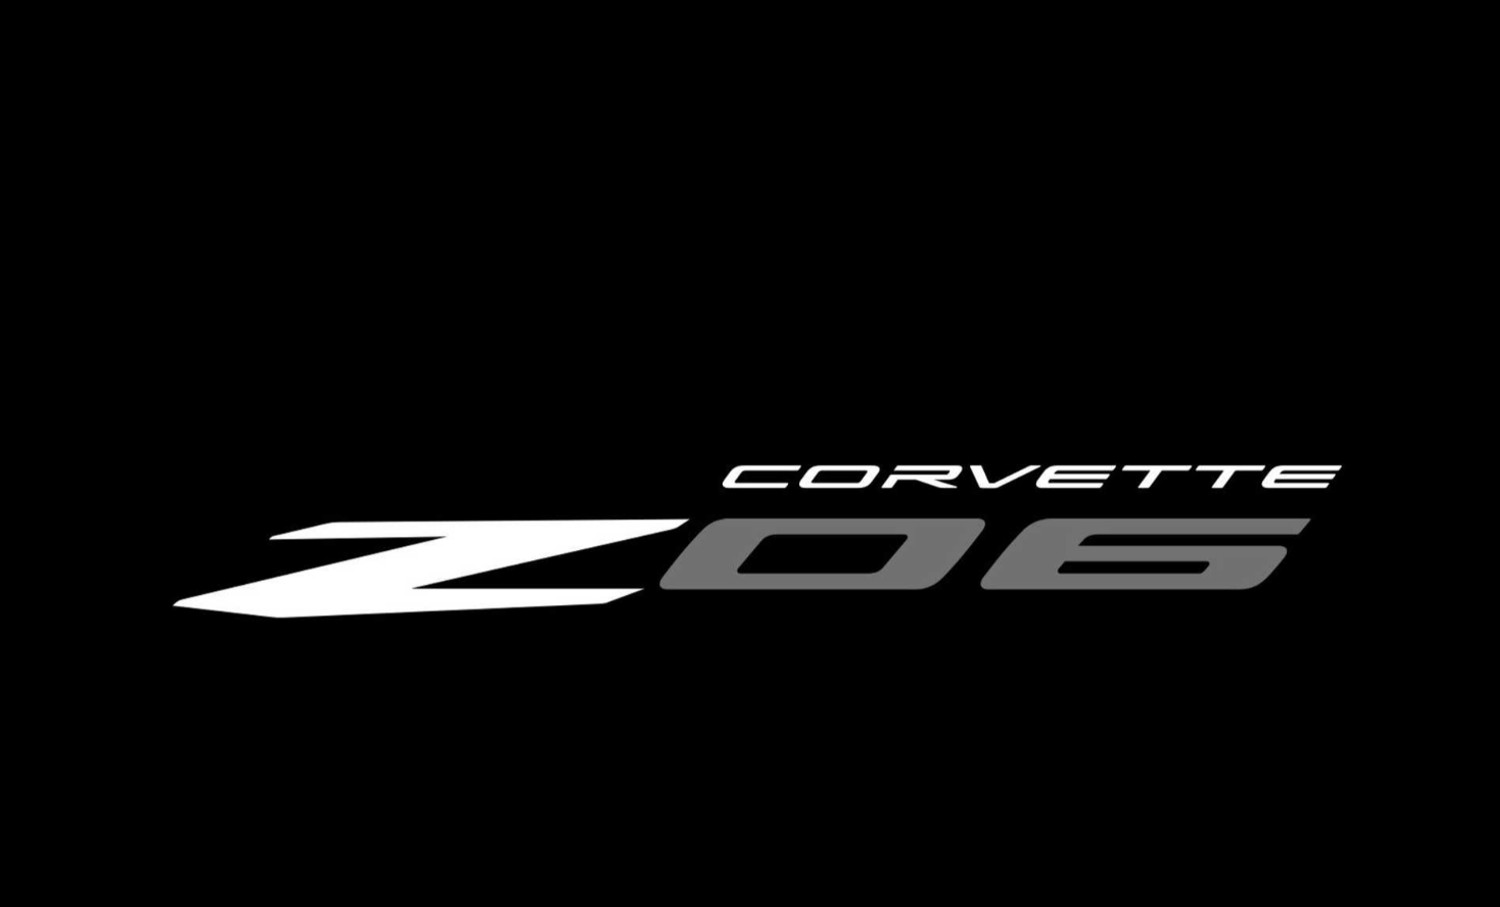 A mítica sigla Corvette